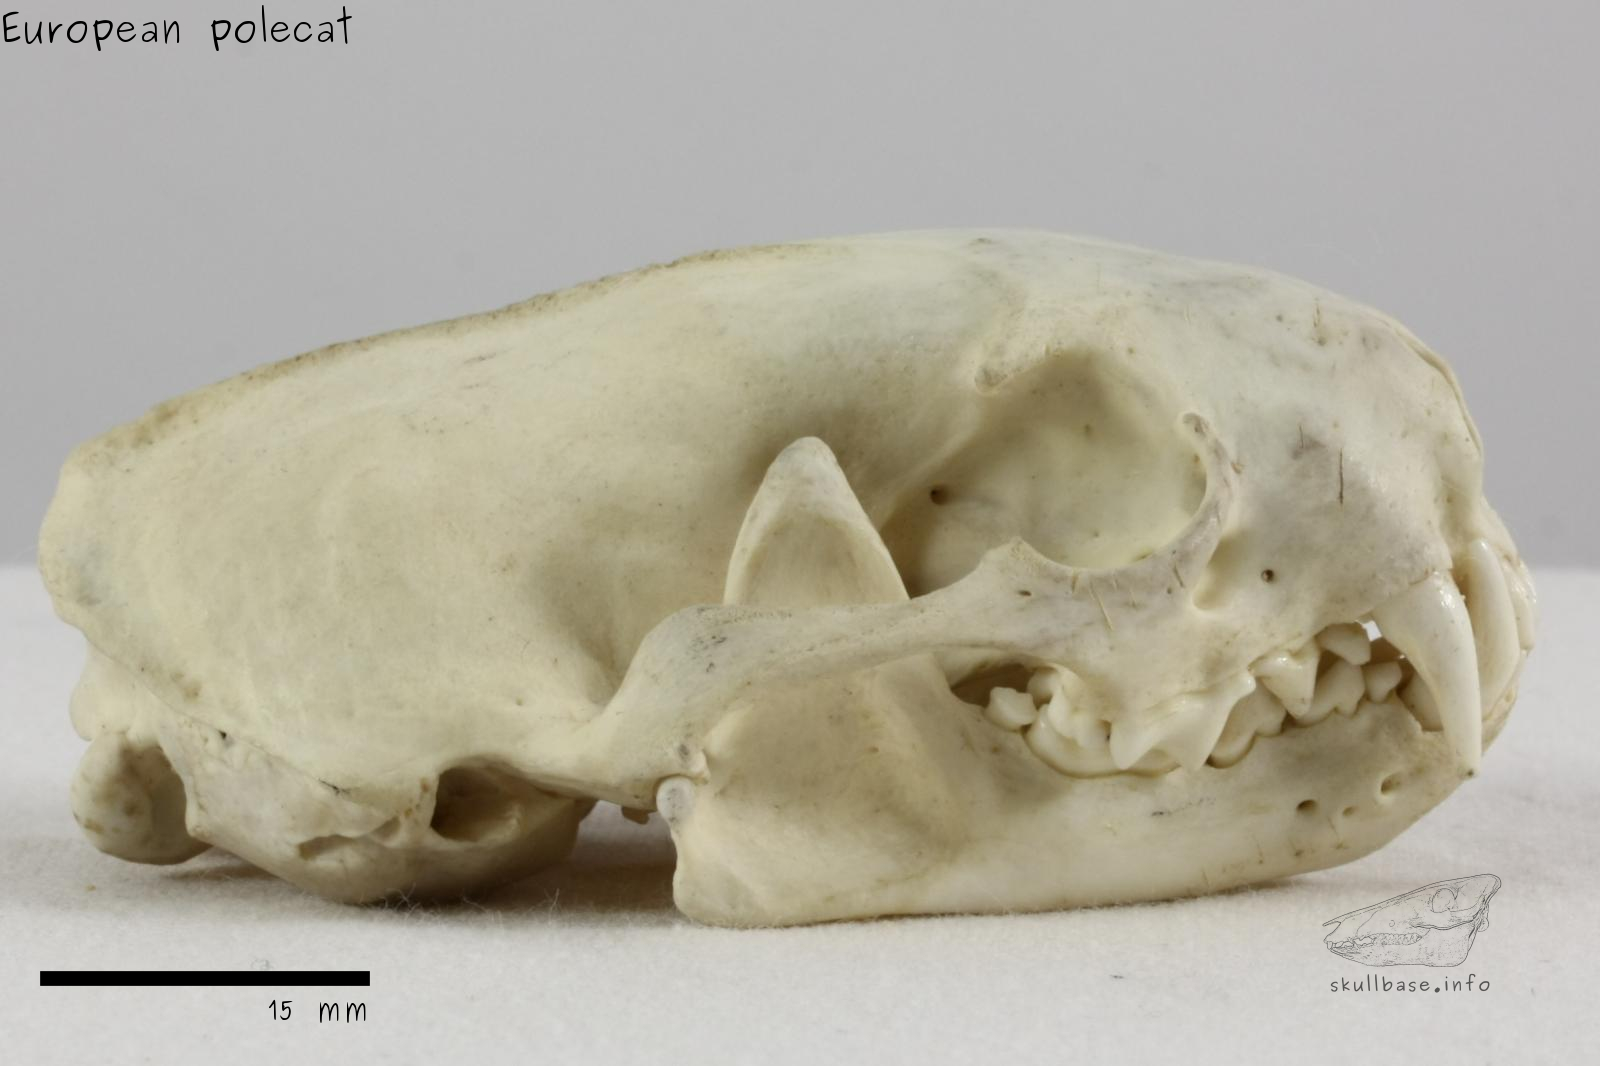 European polecat (Mustela putorius) skull lateral view